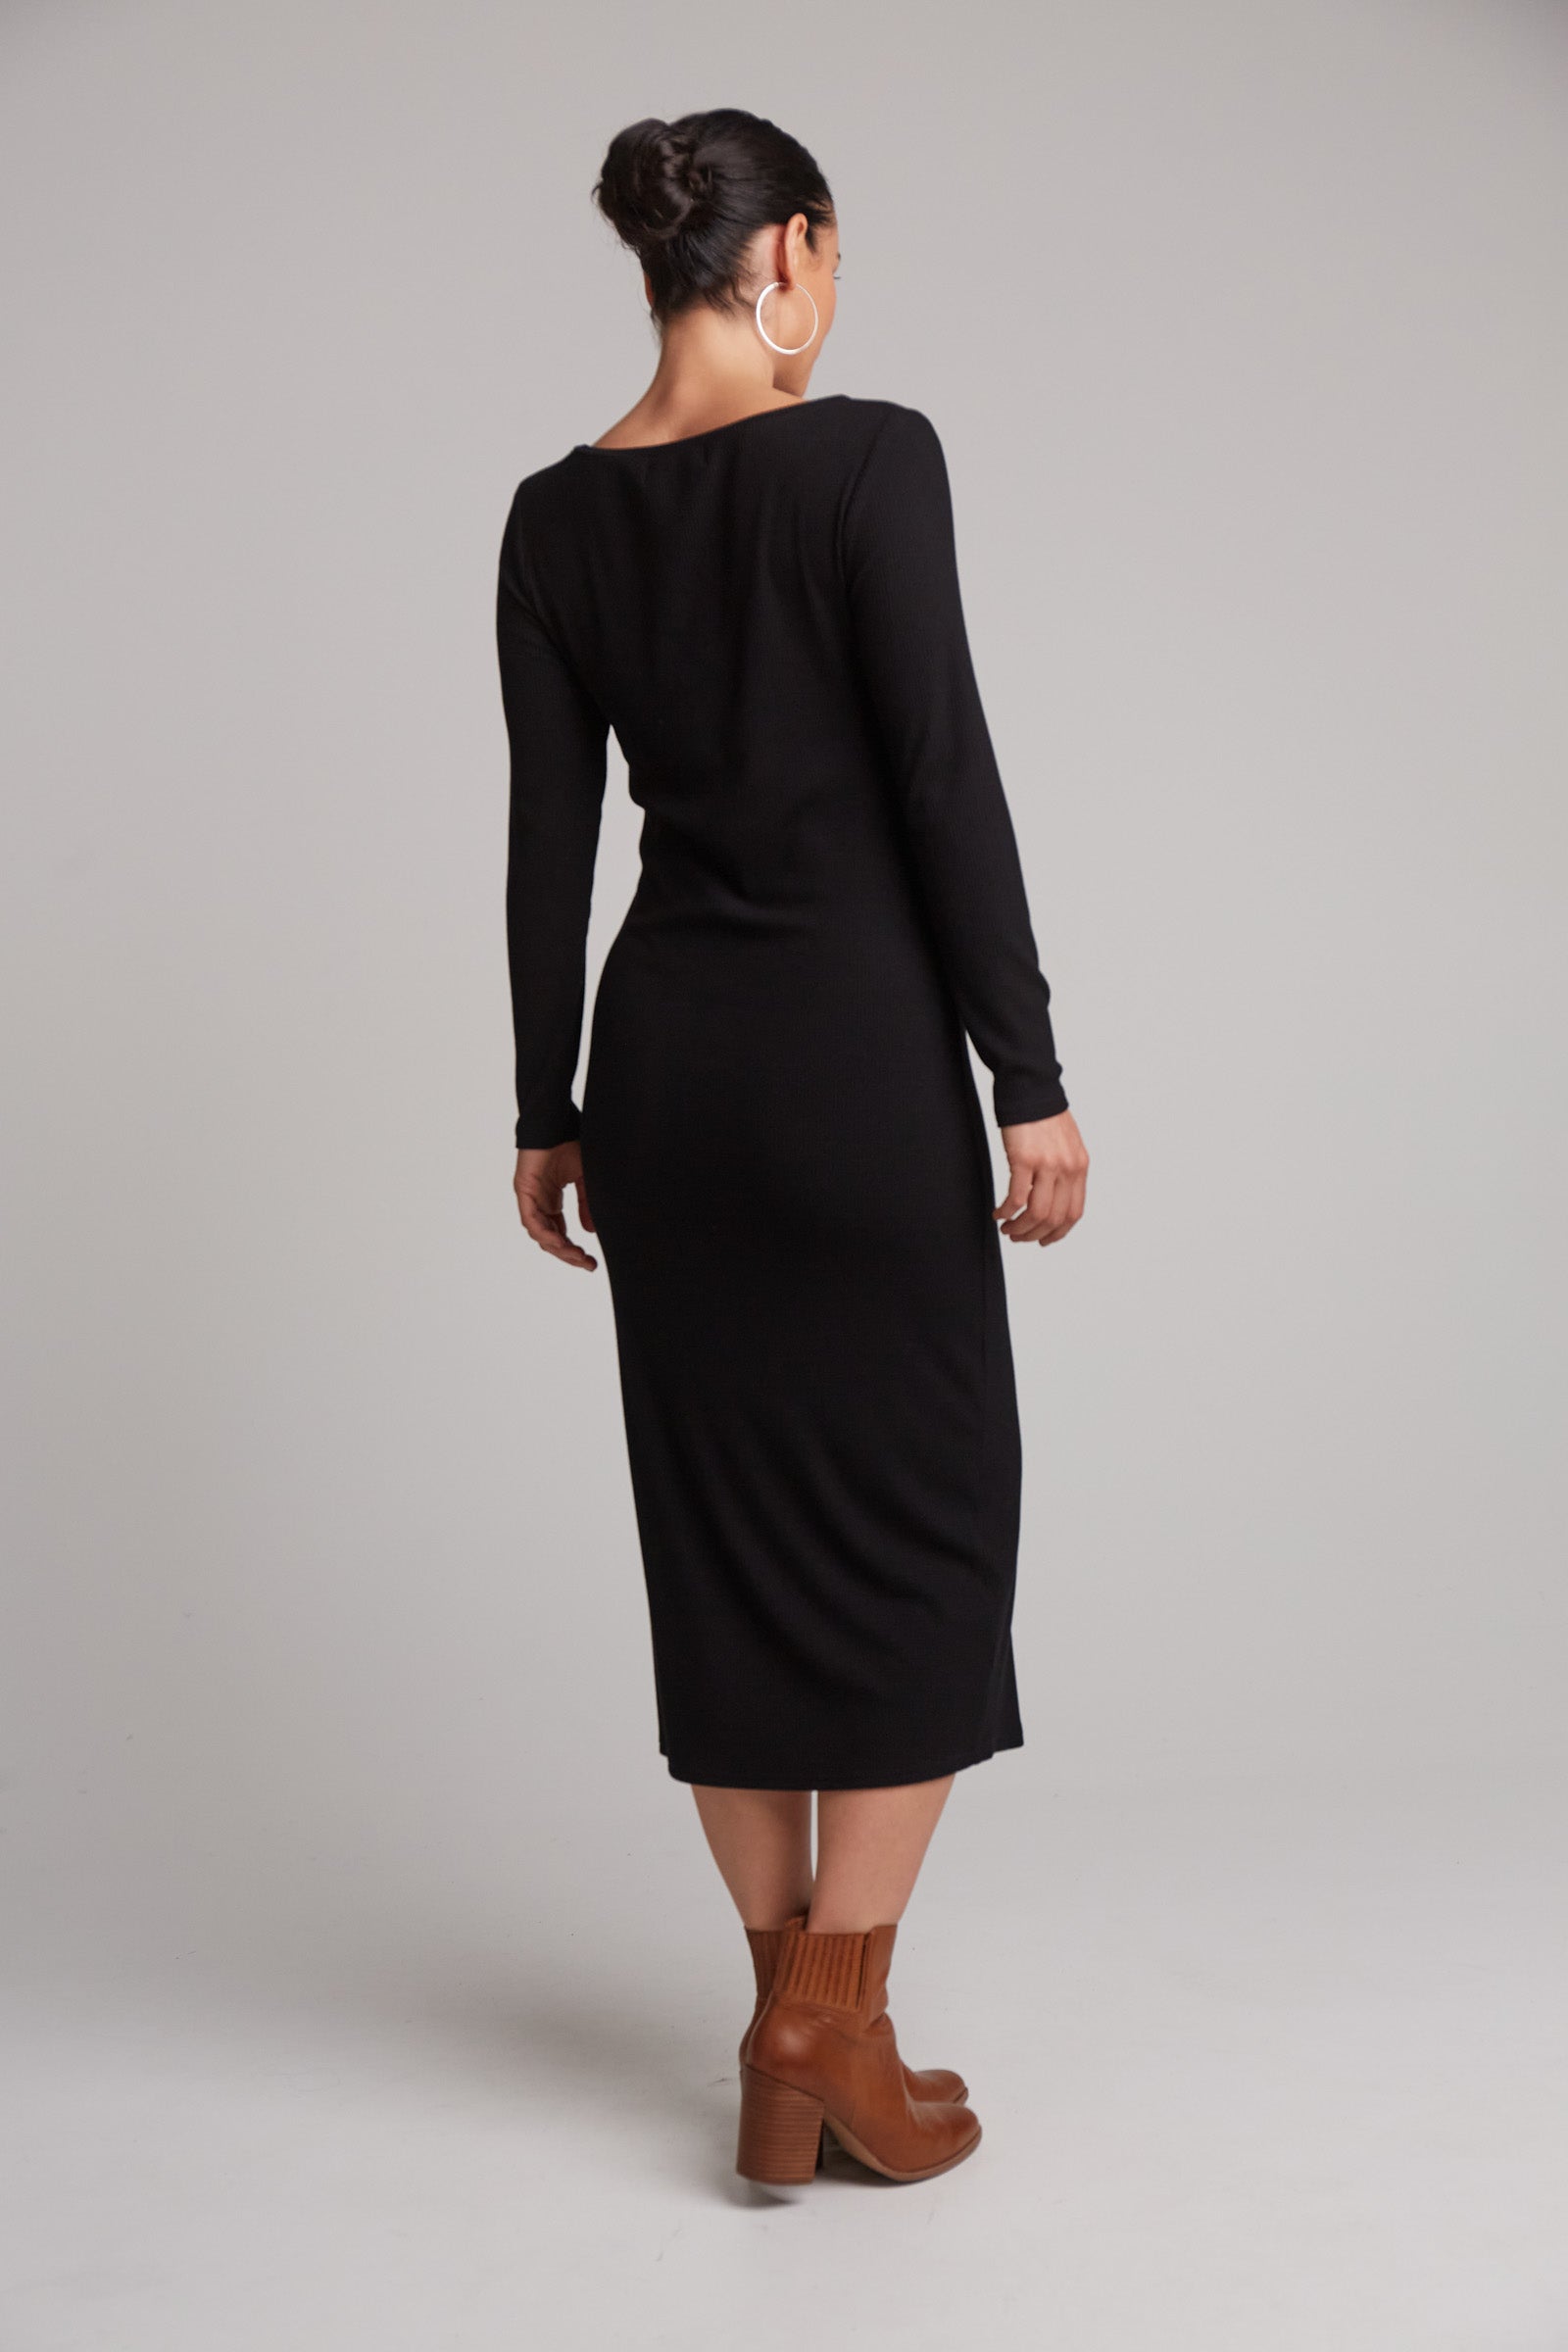 Studio Jersey Maxi - Ebony - eb&ive Clothing - Dress Maxi